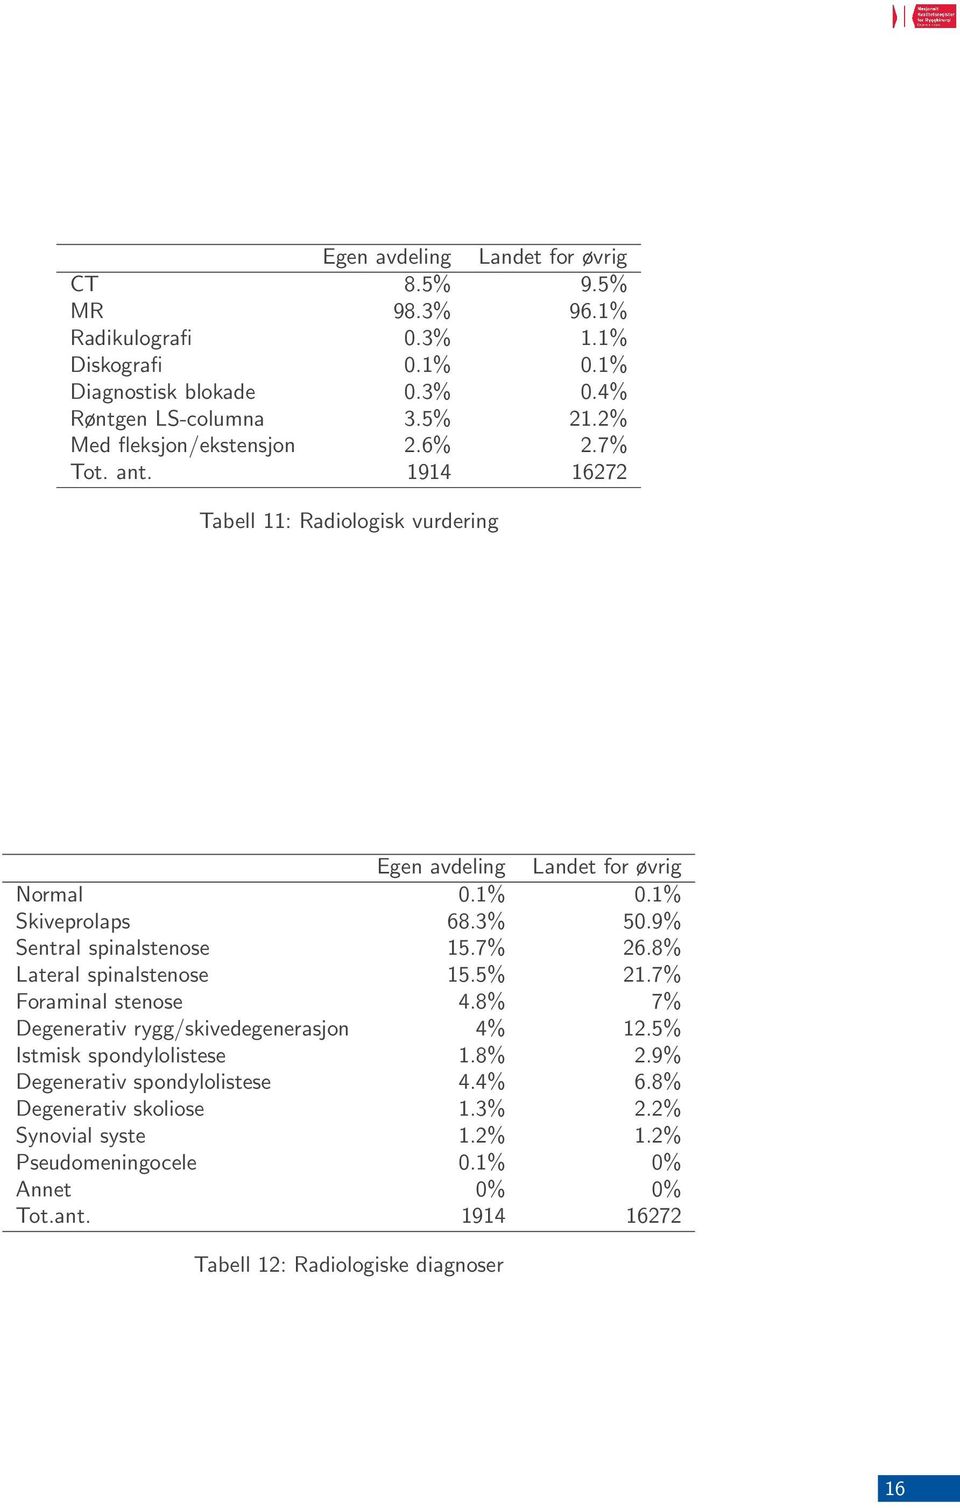 9% Sentral spinalstenose 15.7% 26.8% Lateral spinalstenose 15.5% 21.7% Foraminal stenose 4.8% 7% Degenerativ rygg/skivedegenerasjon 4% 12.5% Istmisk spondylolistese 1.8% 2.